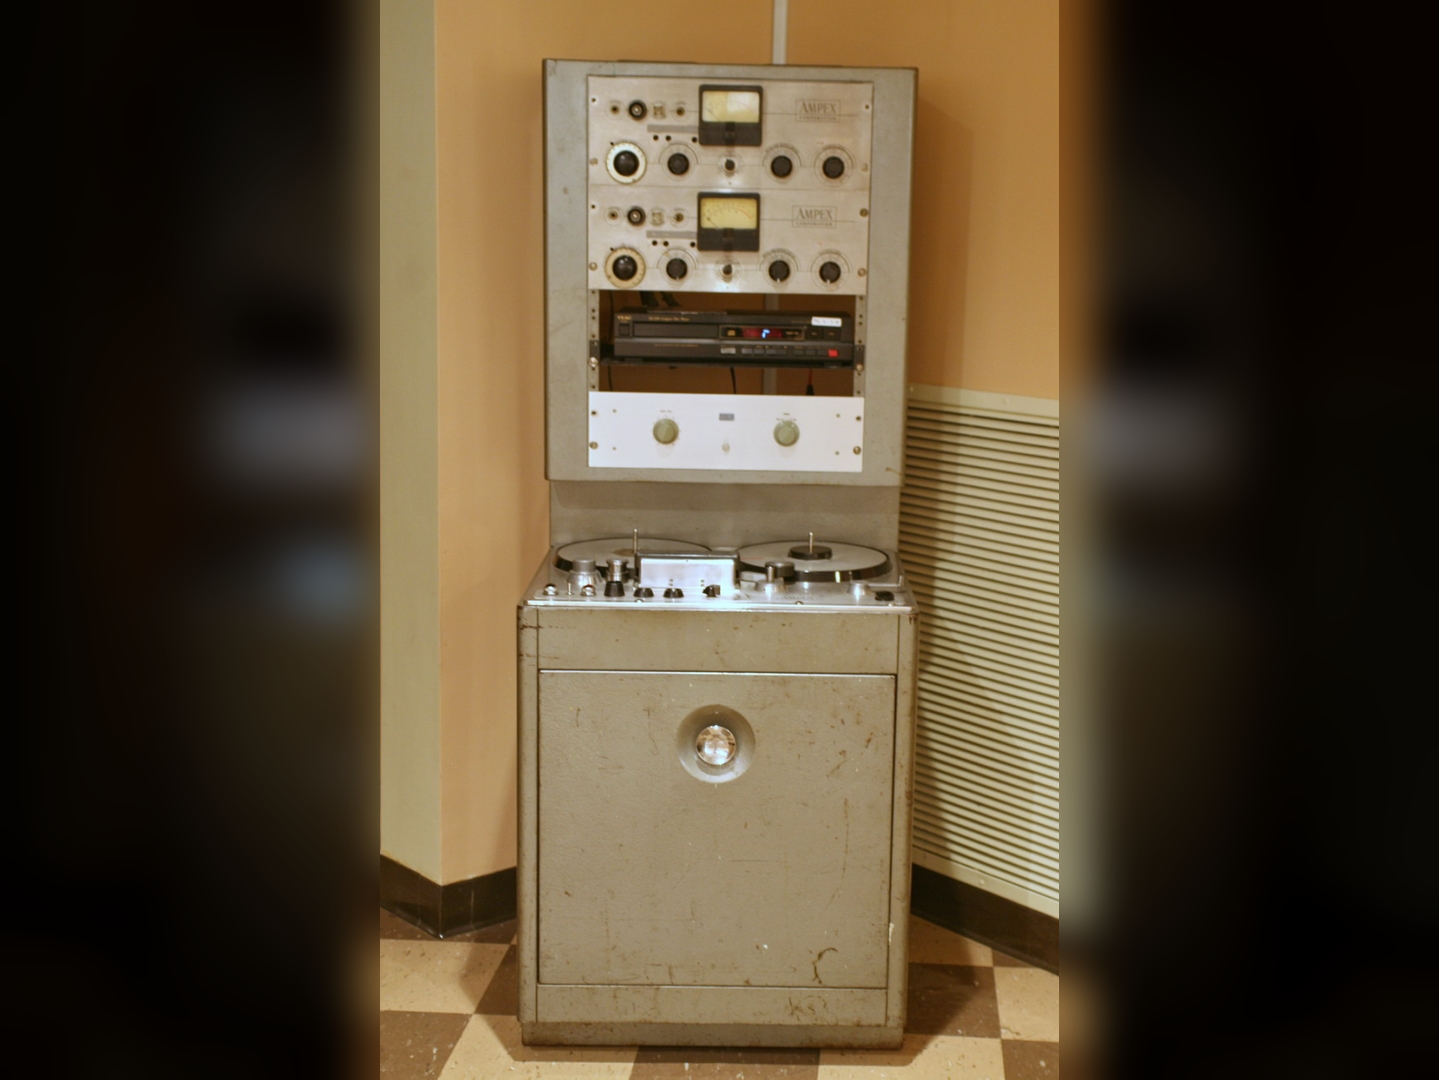 Ampex 300 модели сам немного похож на стойку. Источник фото: RCA Studio B by Cliff, лицензия CC 2.0.  